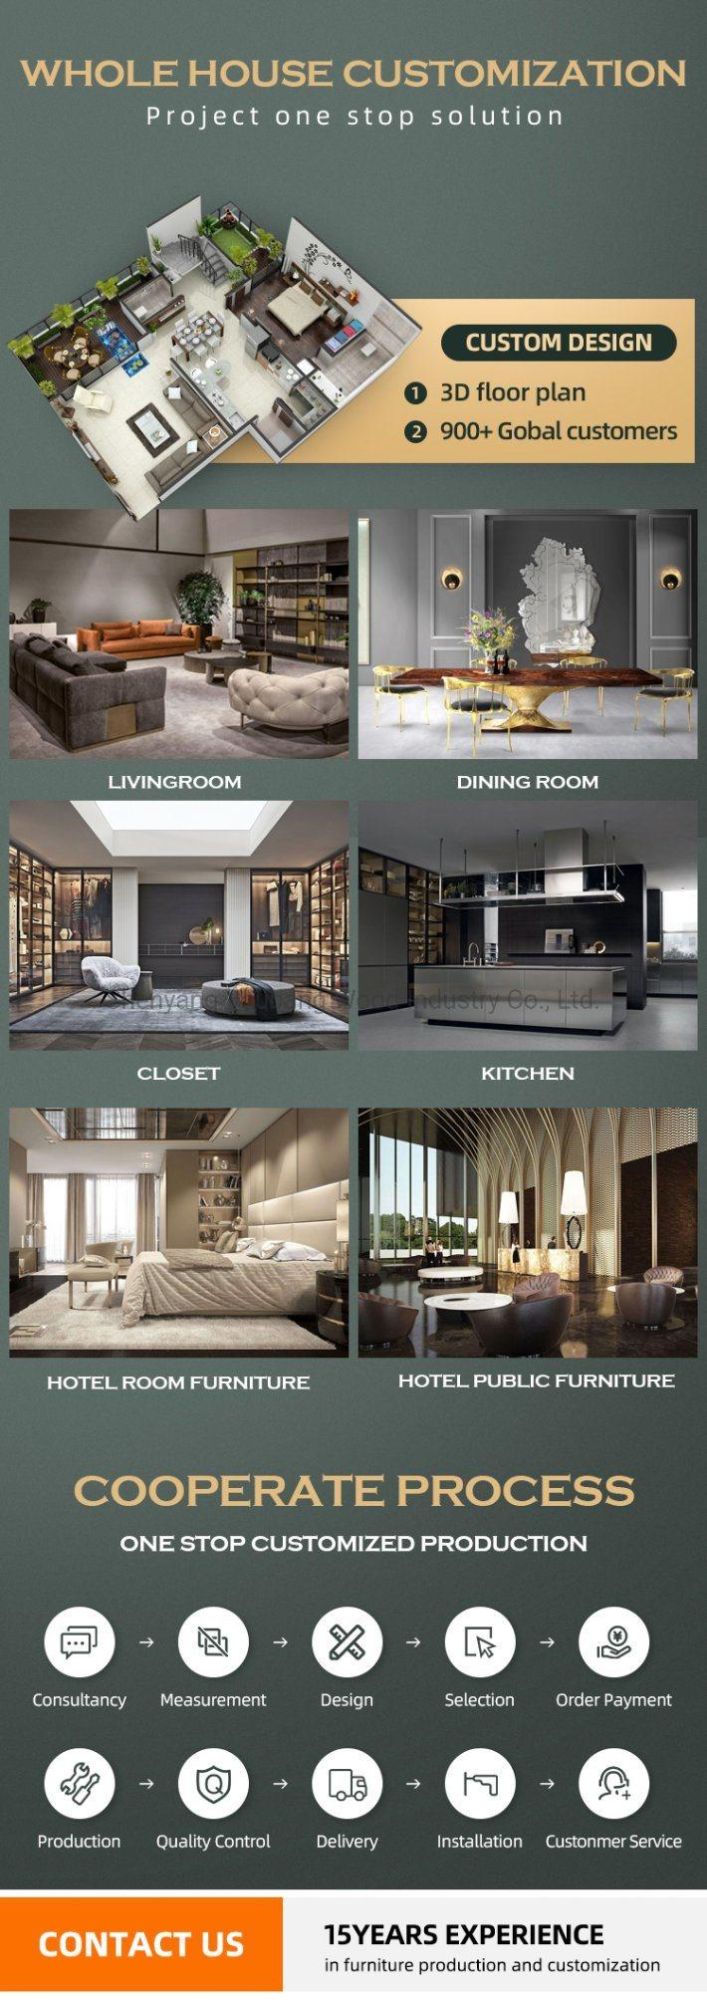 Italy Import Poster Bedroom Furniture Set Italian Modern Luxury